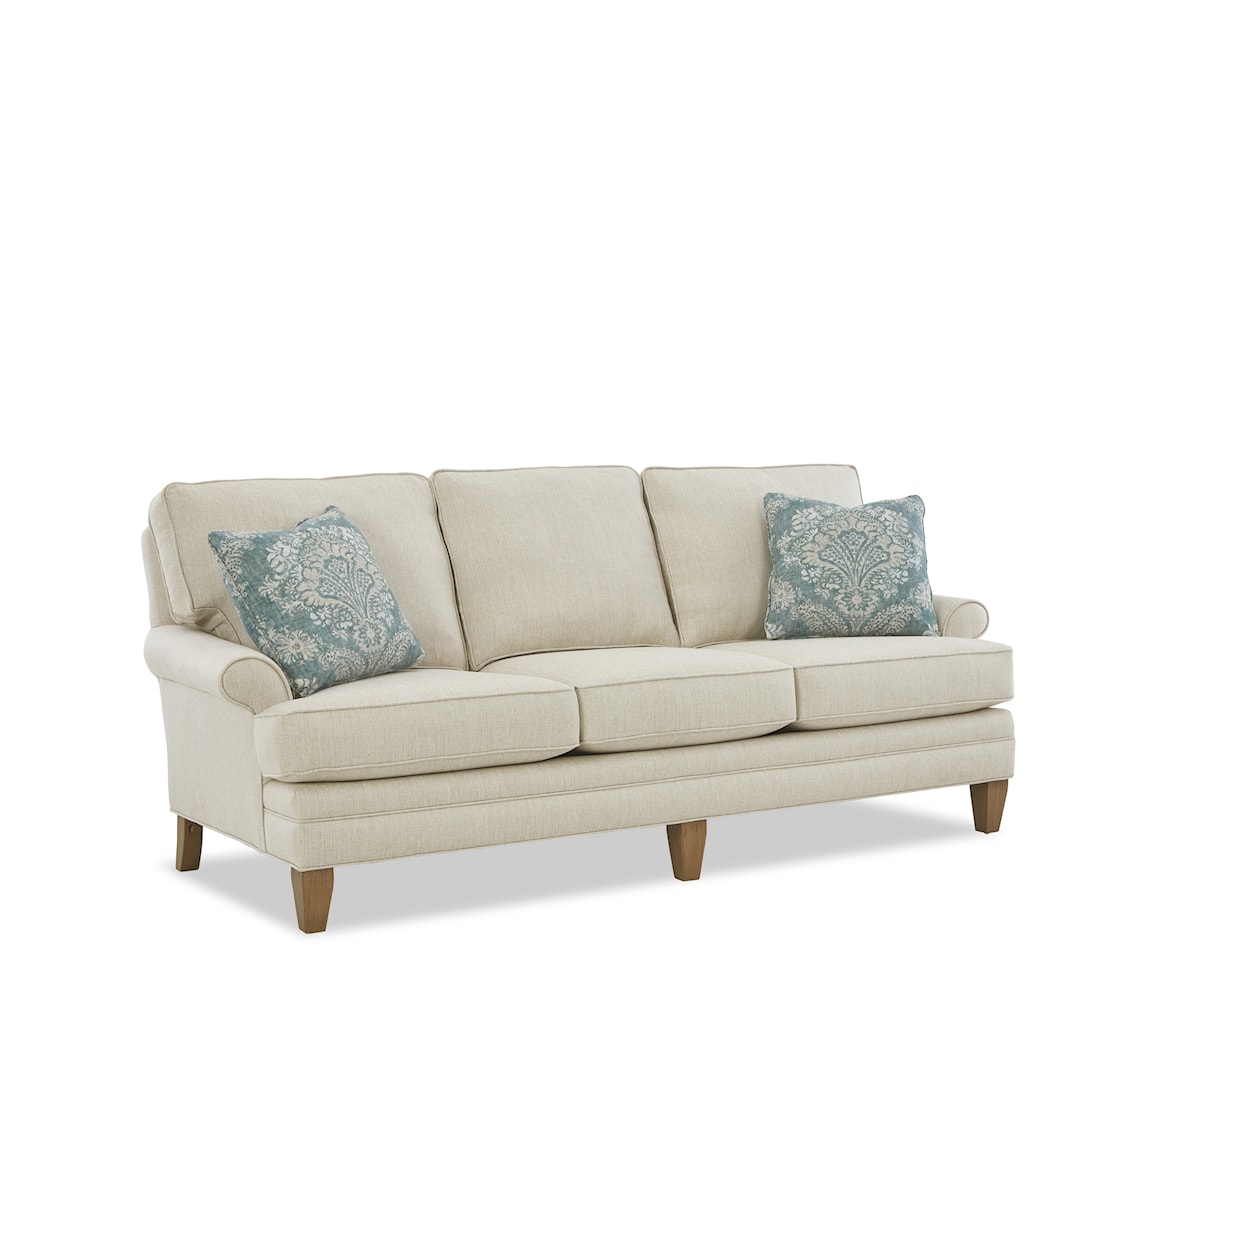 Craftmaster 718350 3-Cushion Sofa